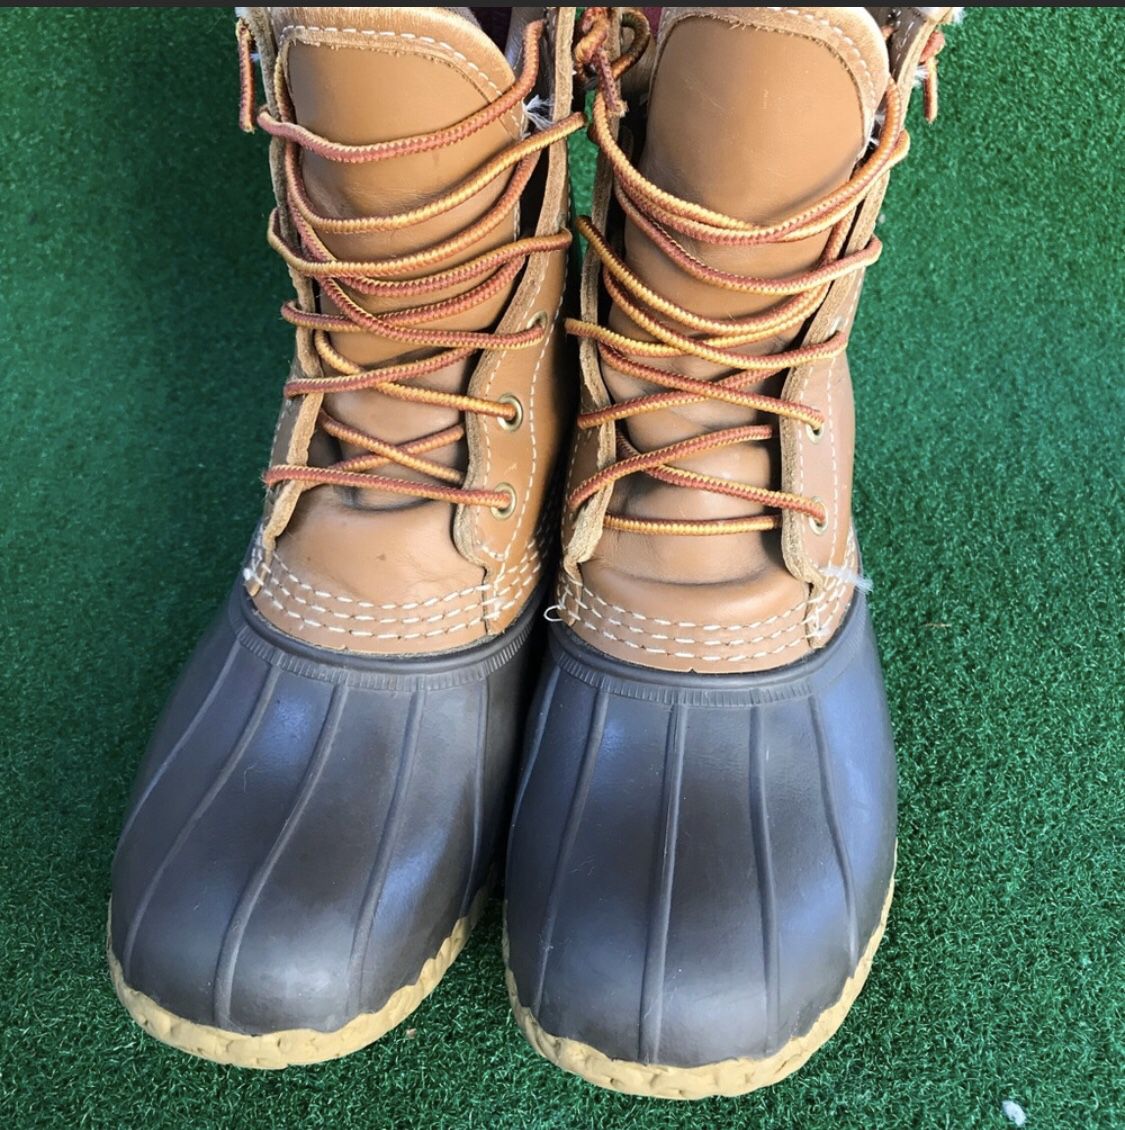 LL Bean Men’s size 7 Goretex lined duck boots - 8 in